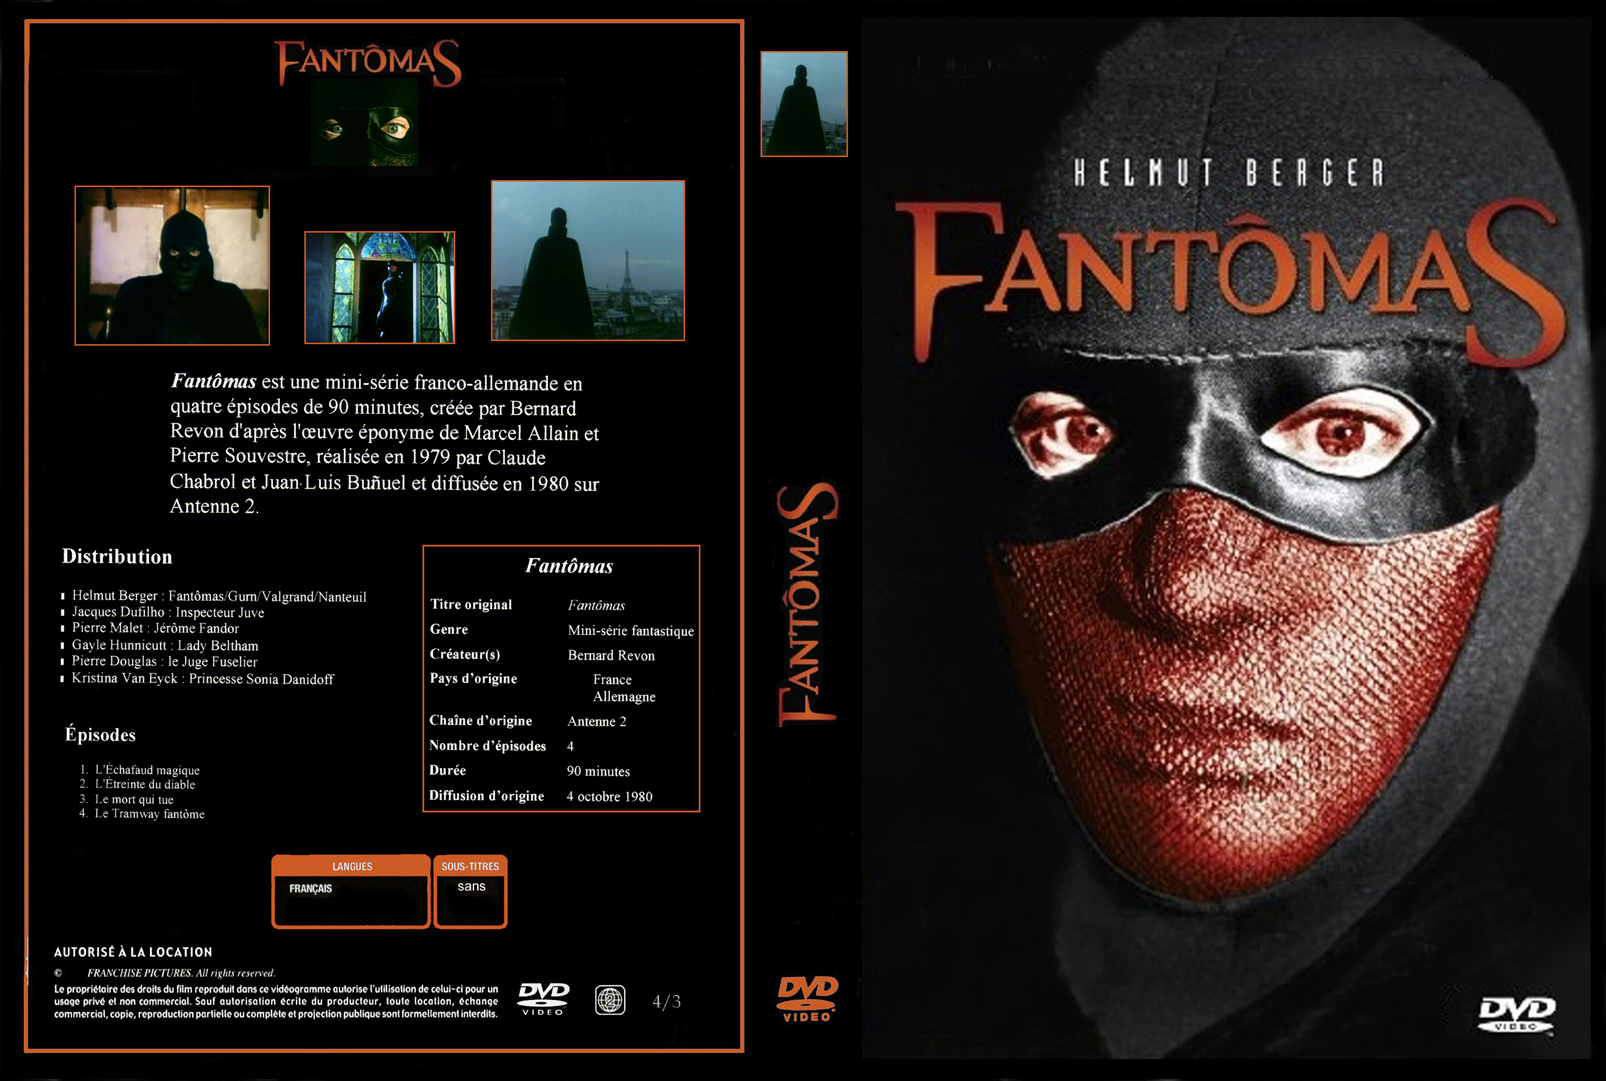 Jaquette DVD Fantomas La srie custom